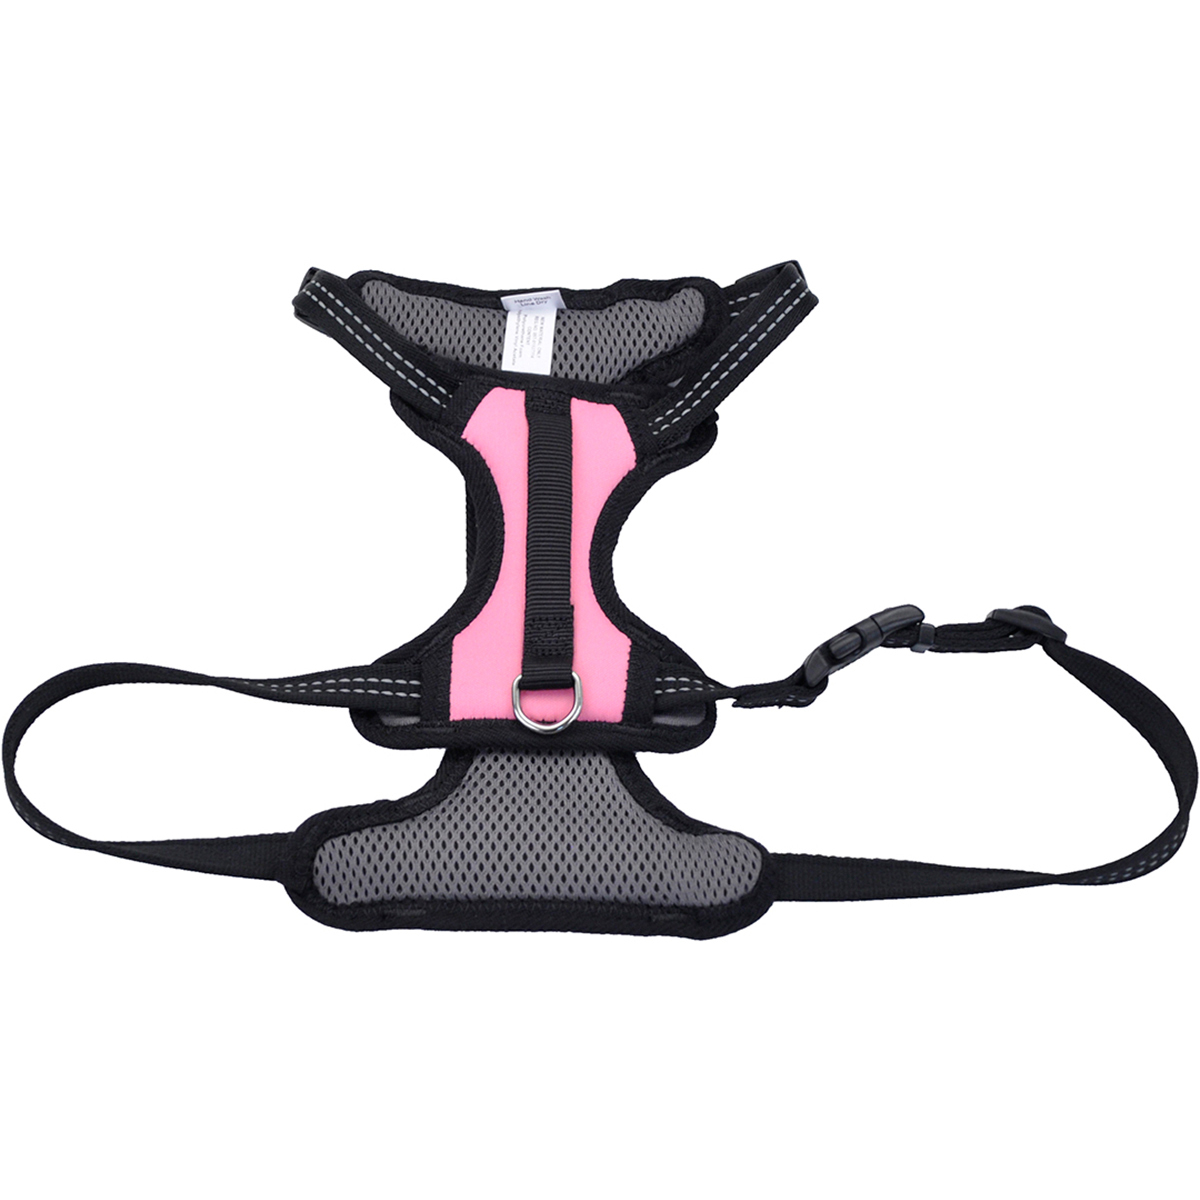 06489pkm Control Handle Harness, Pink - Medium